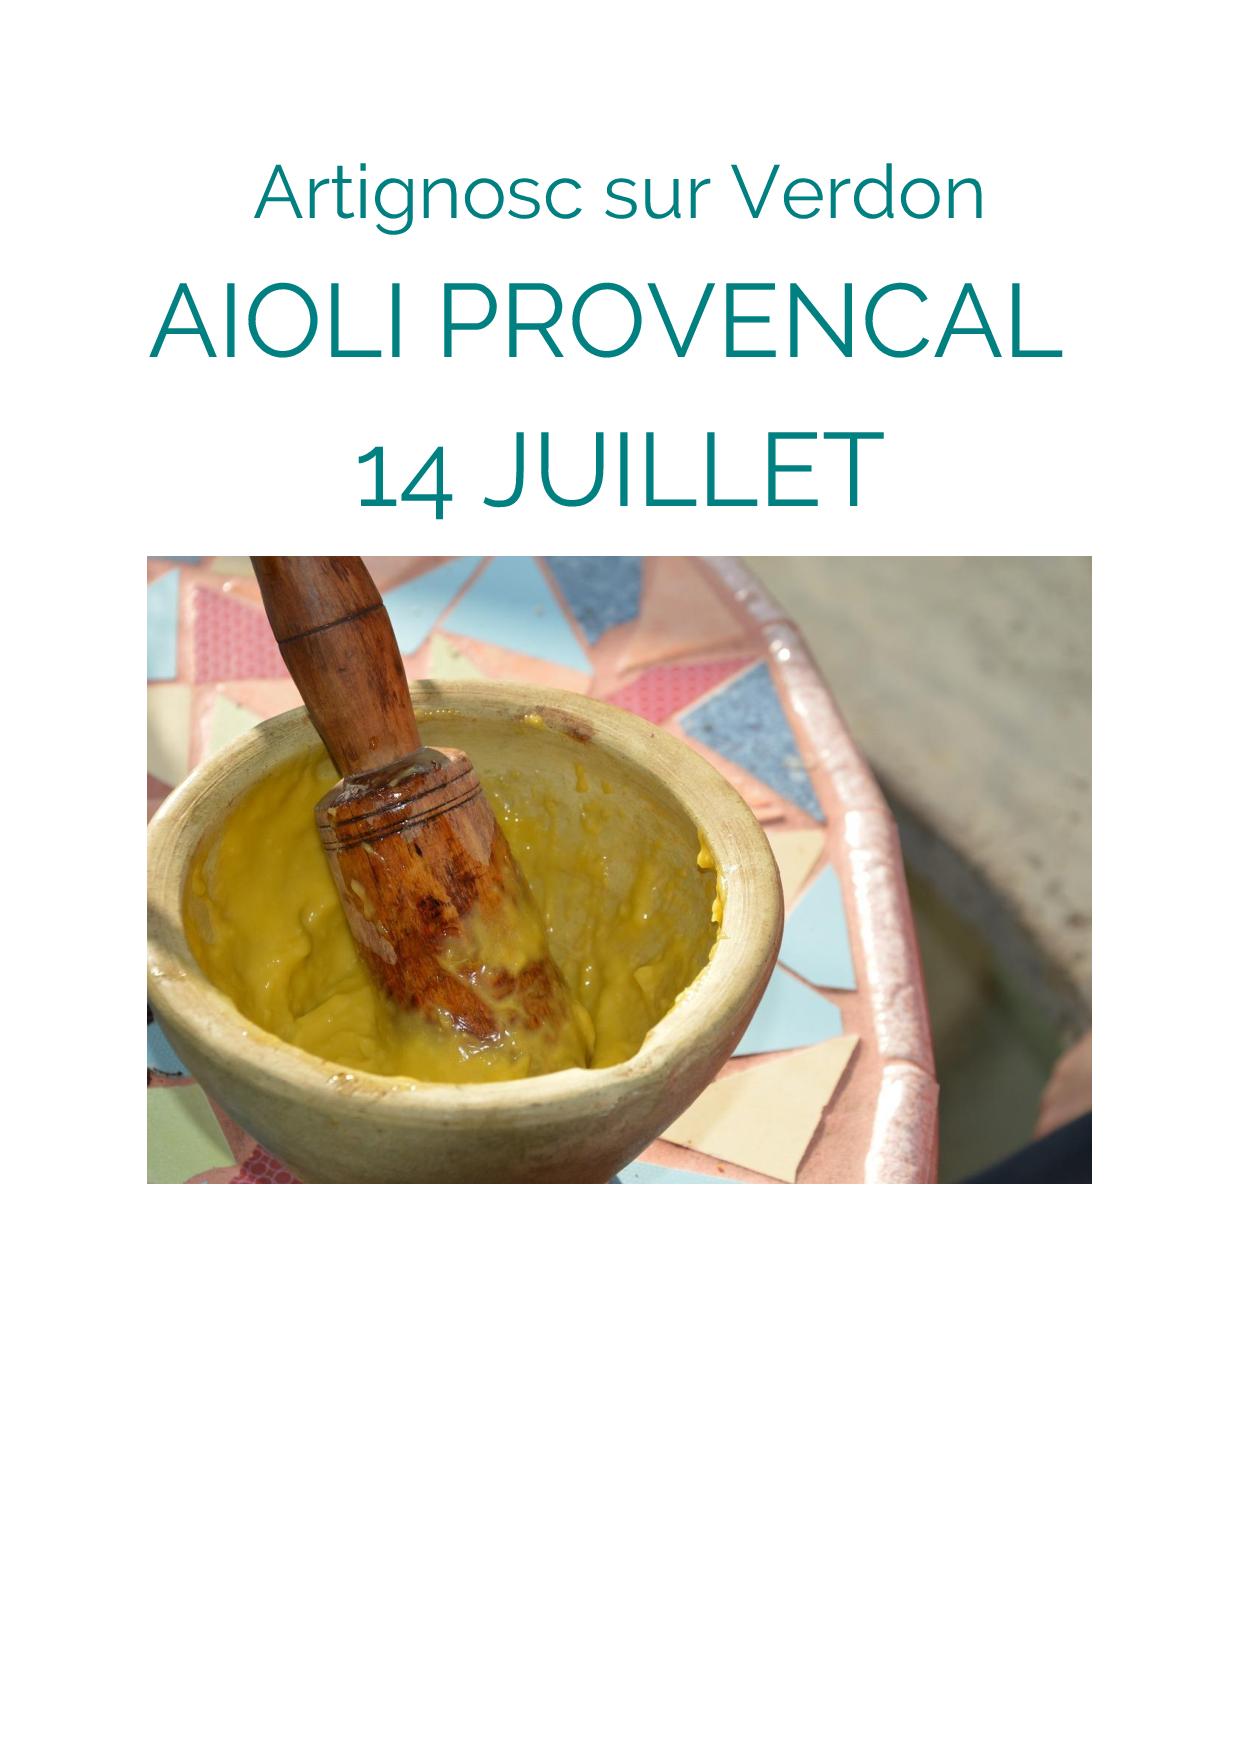 Aïoli provençal Artignosc 14 juillet - Aïoli provençal